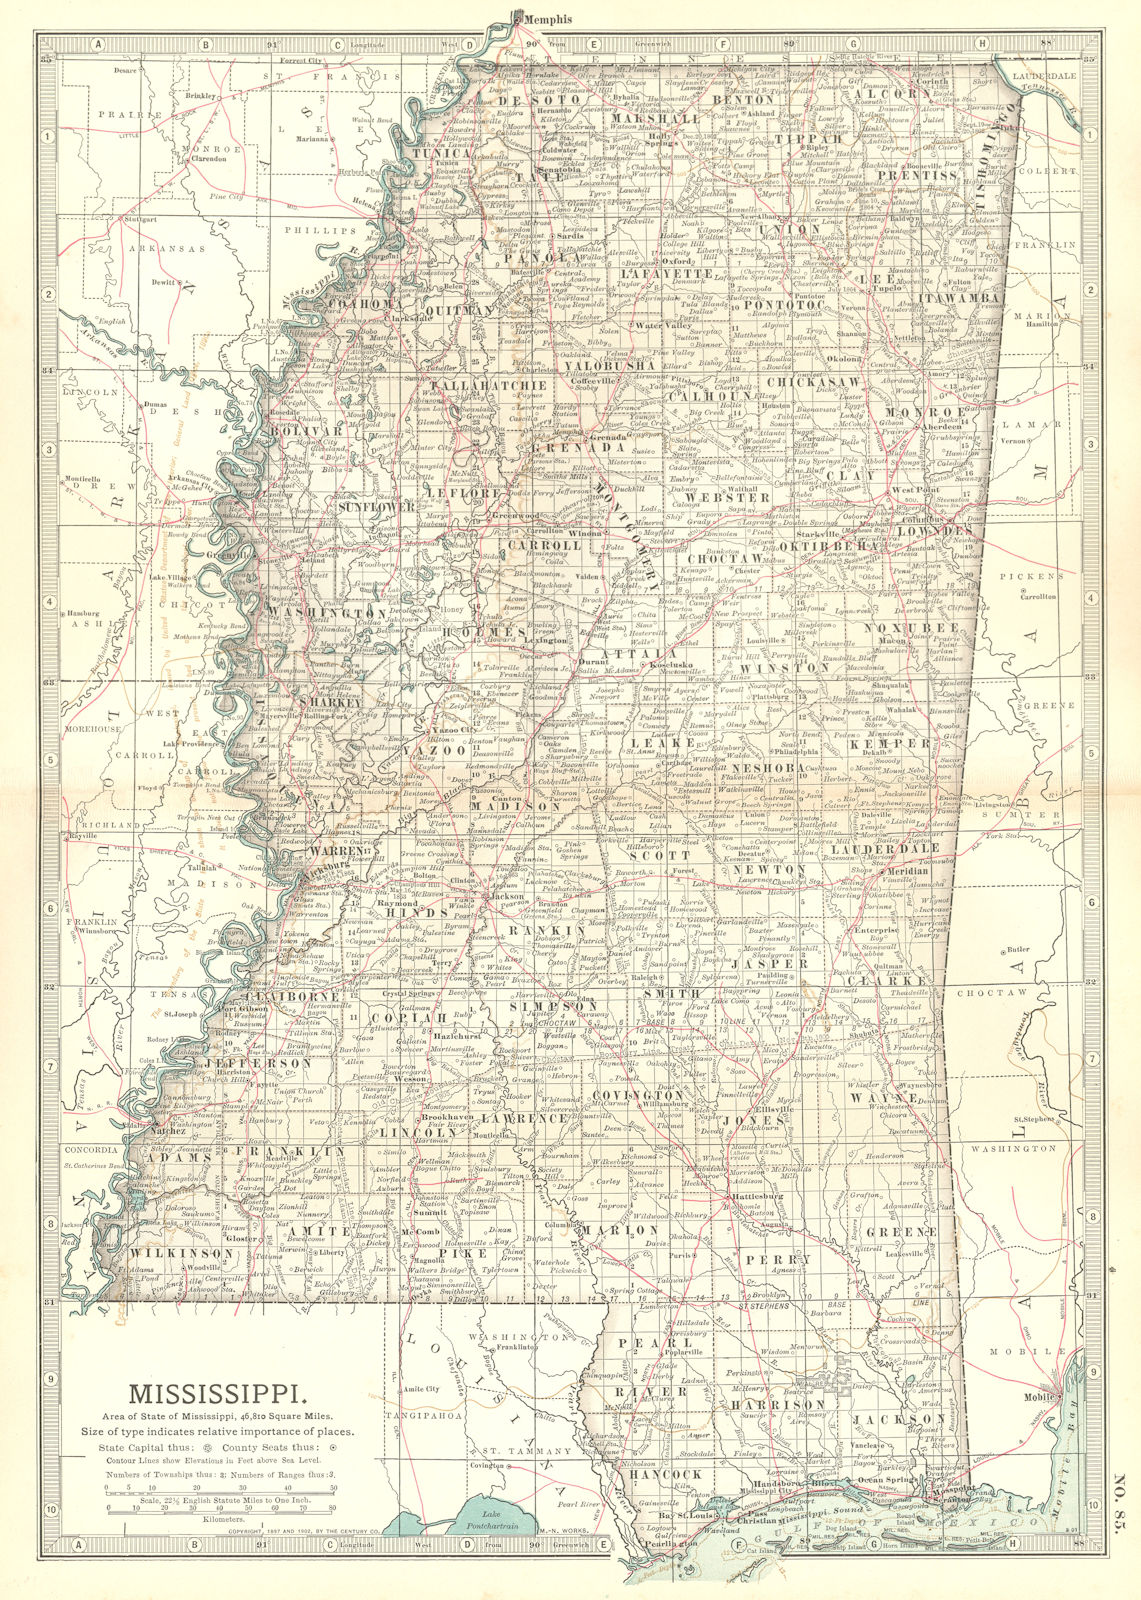 MISSISSIPPI. State. Civil war battlefields/dates.Choctaw treaty lines 1903 map